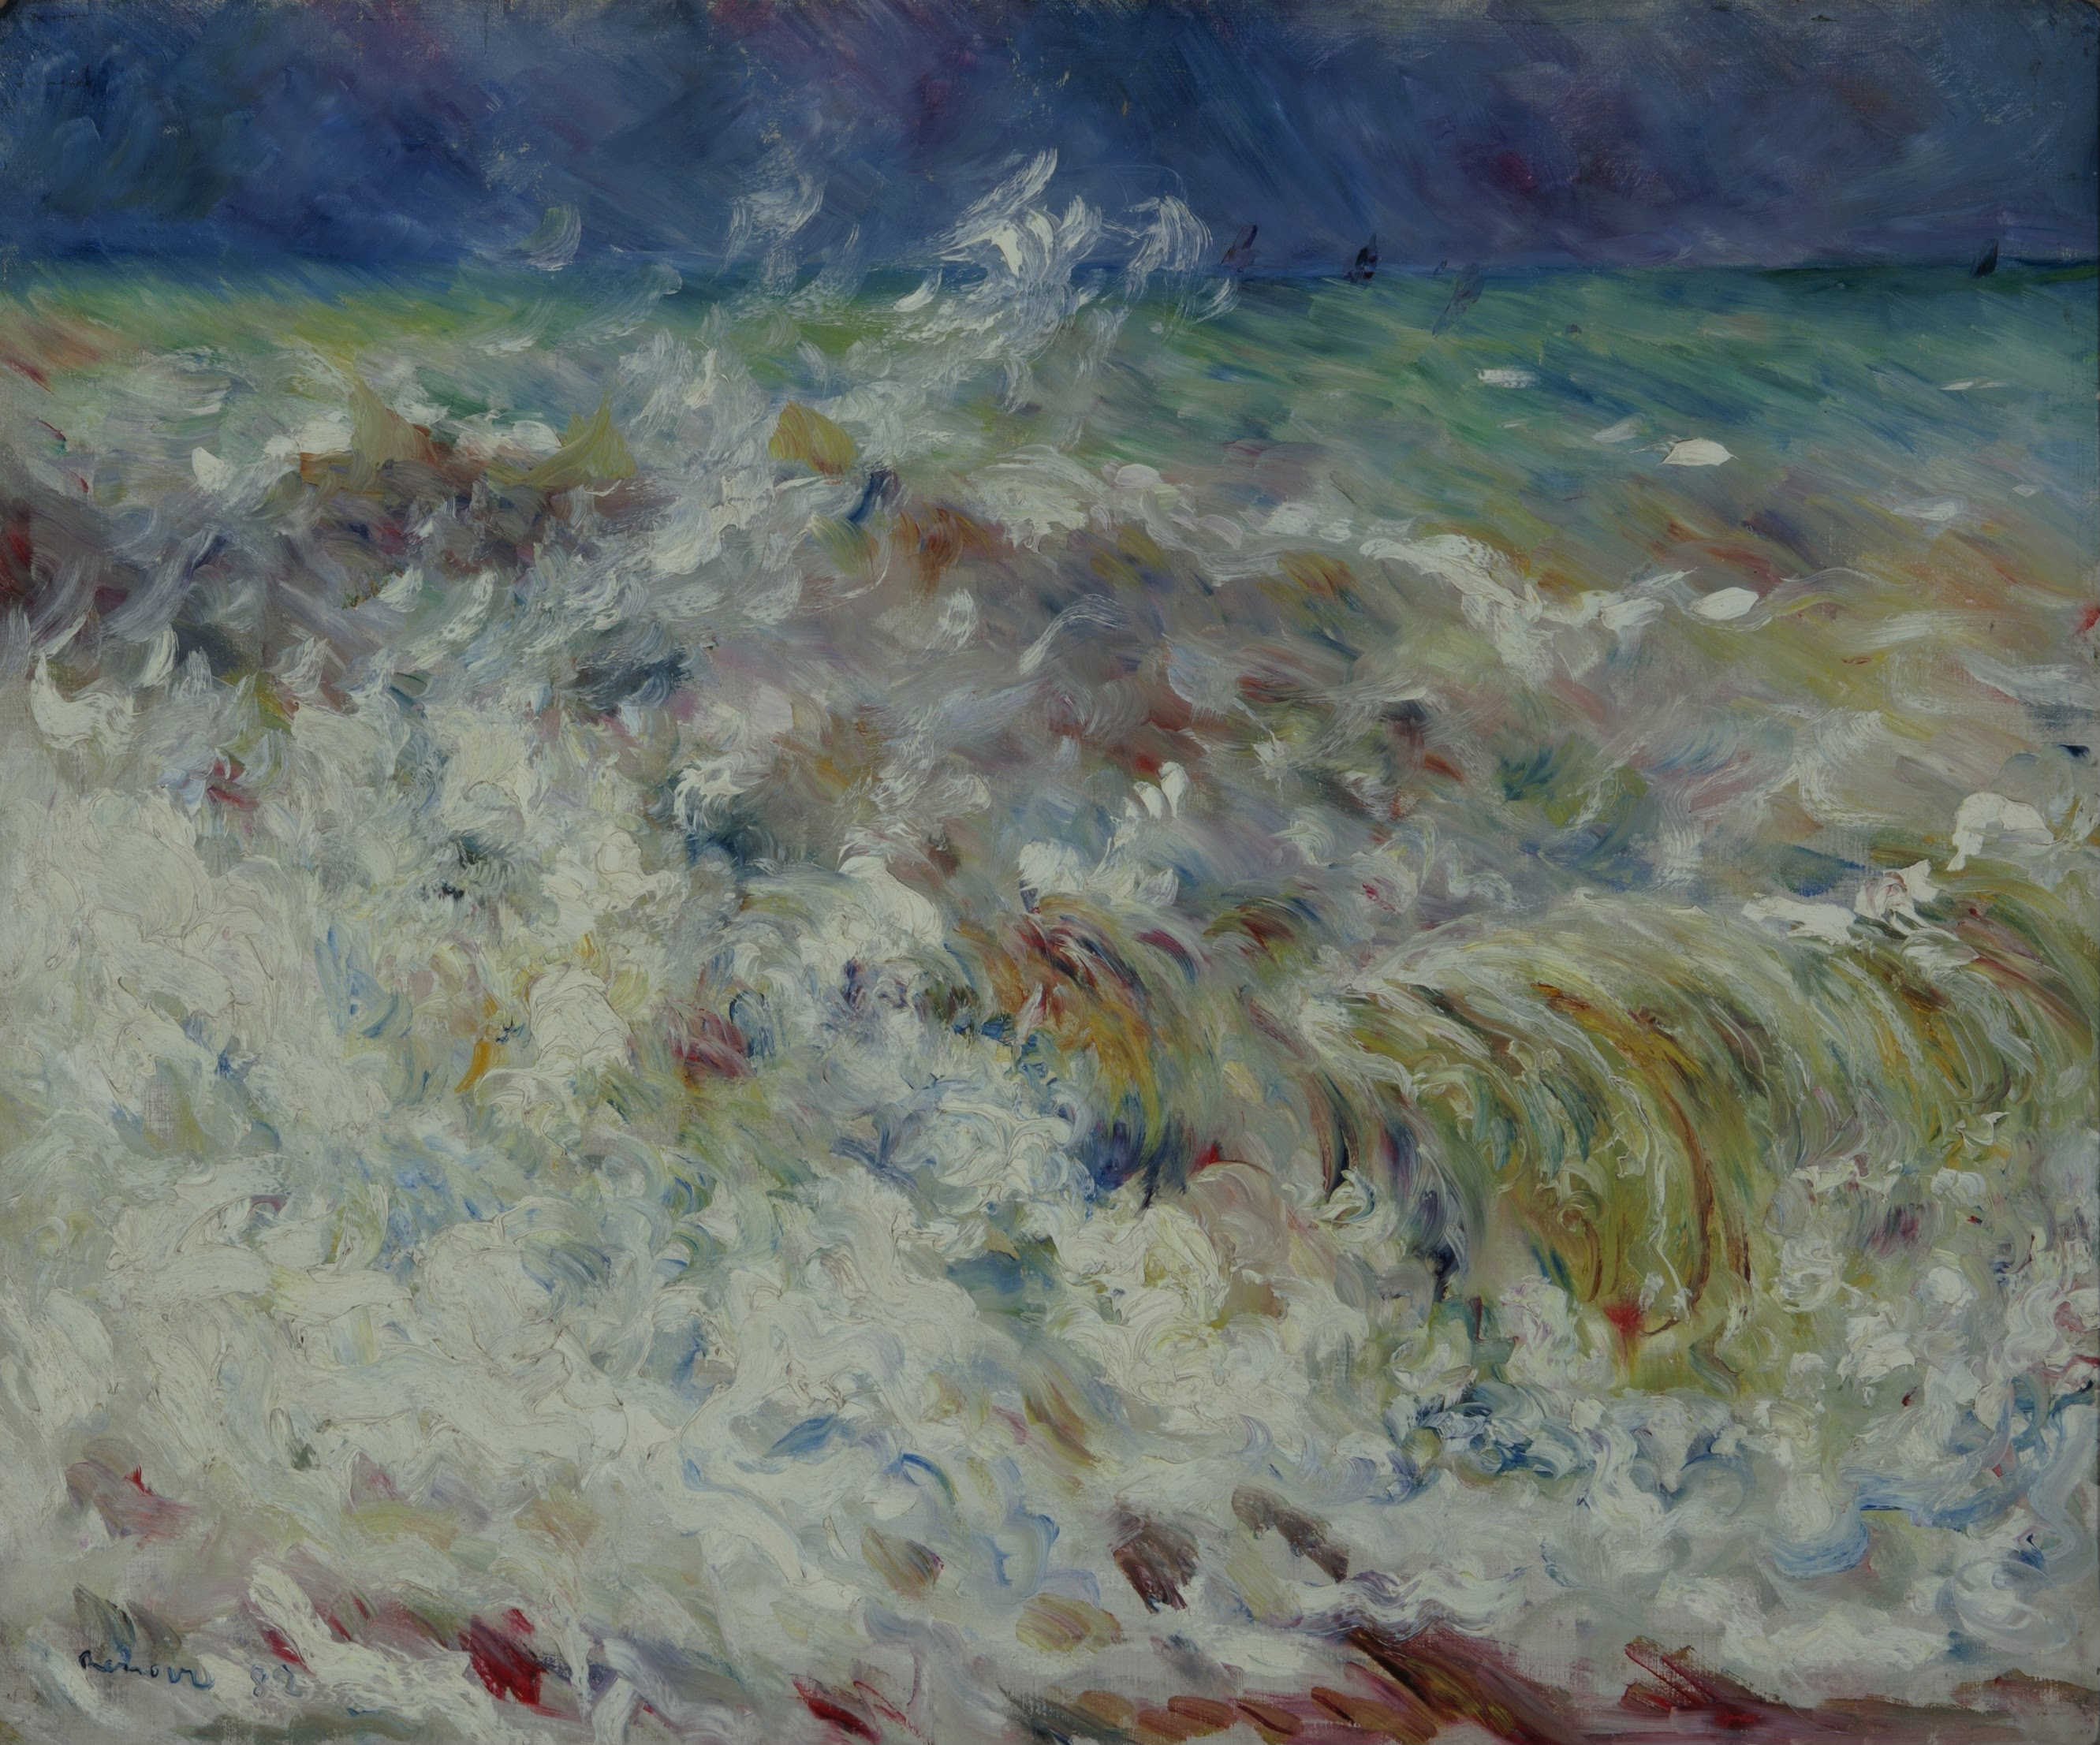 The Wave - Pierre-Auguste Renoir - Google Cultural Institute